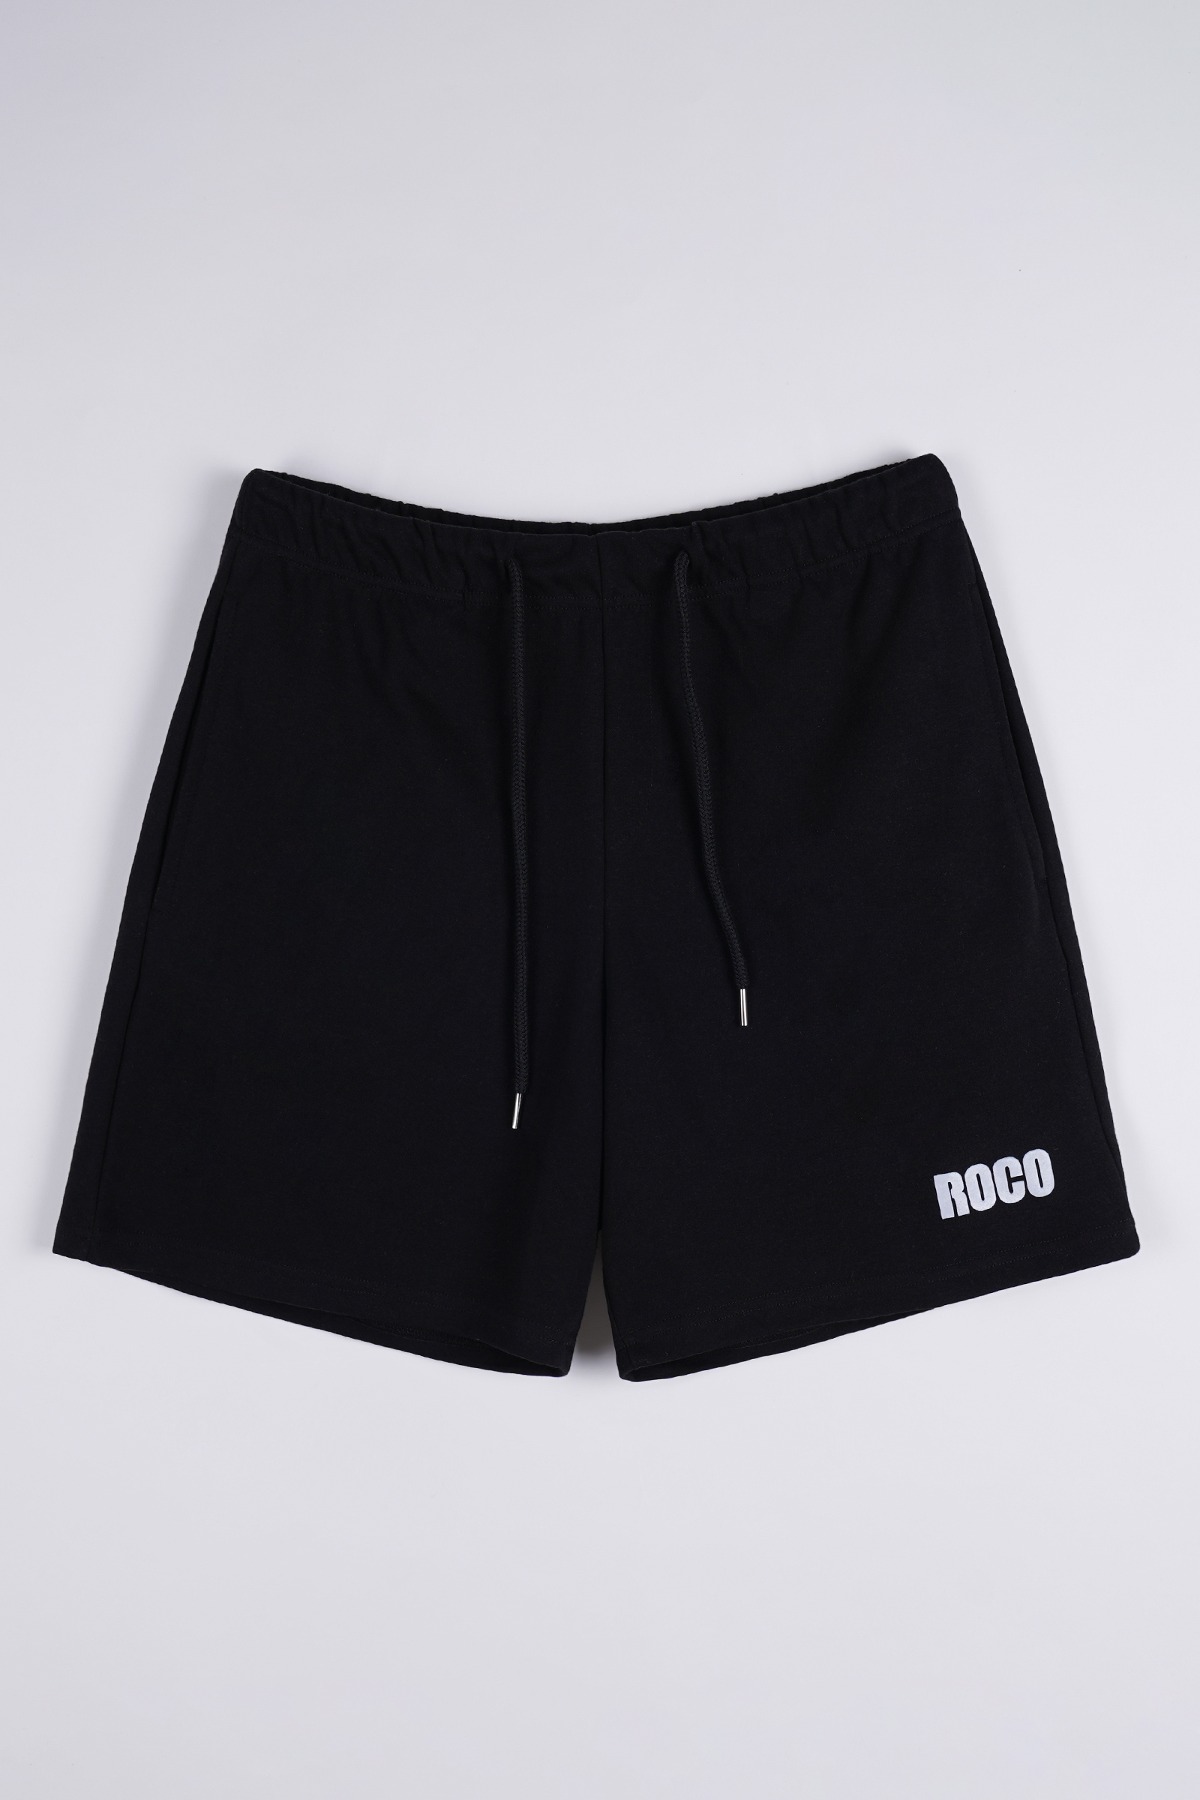 R Authentic Shorts black